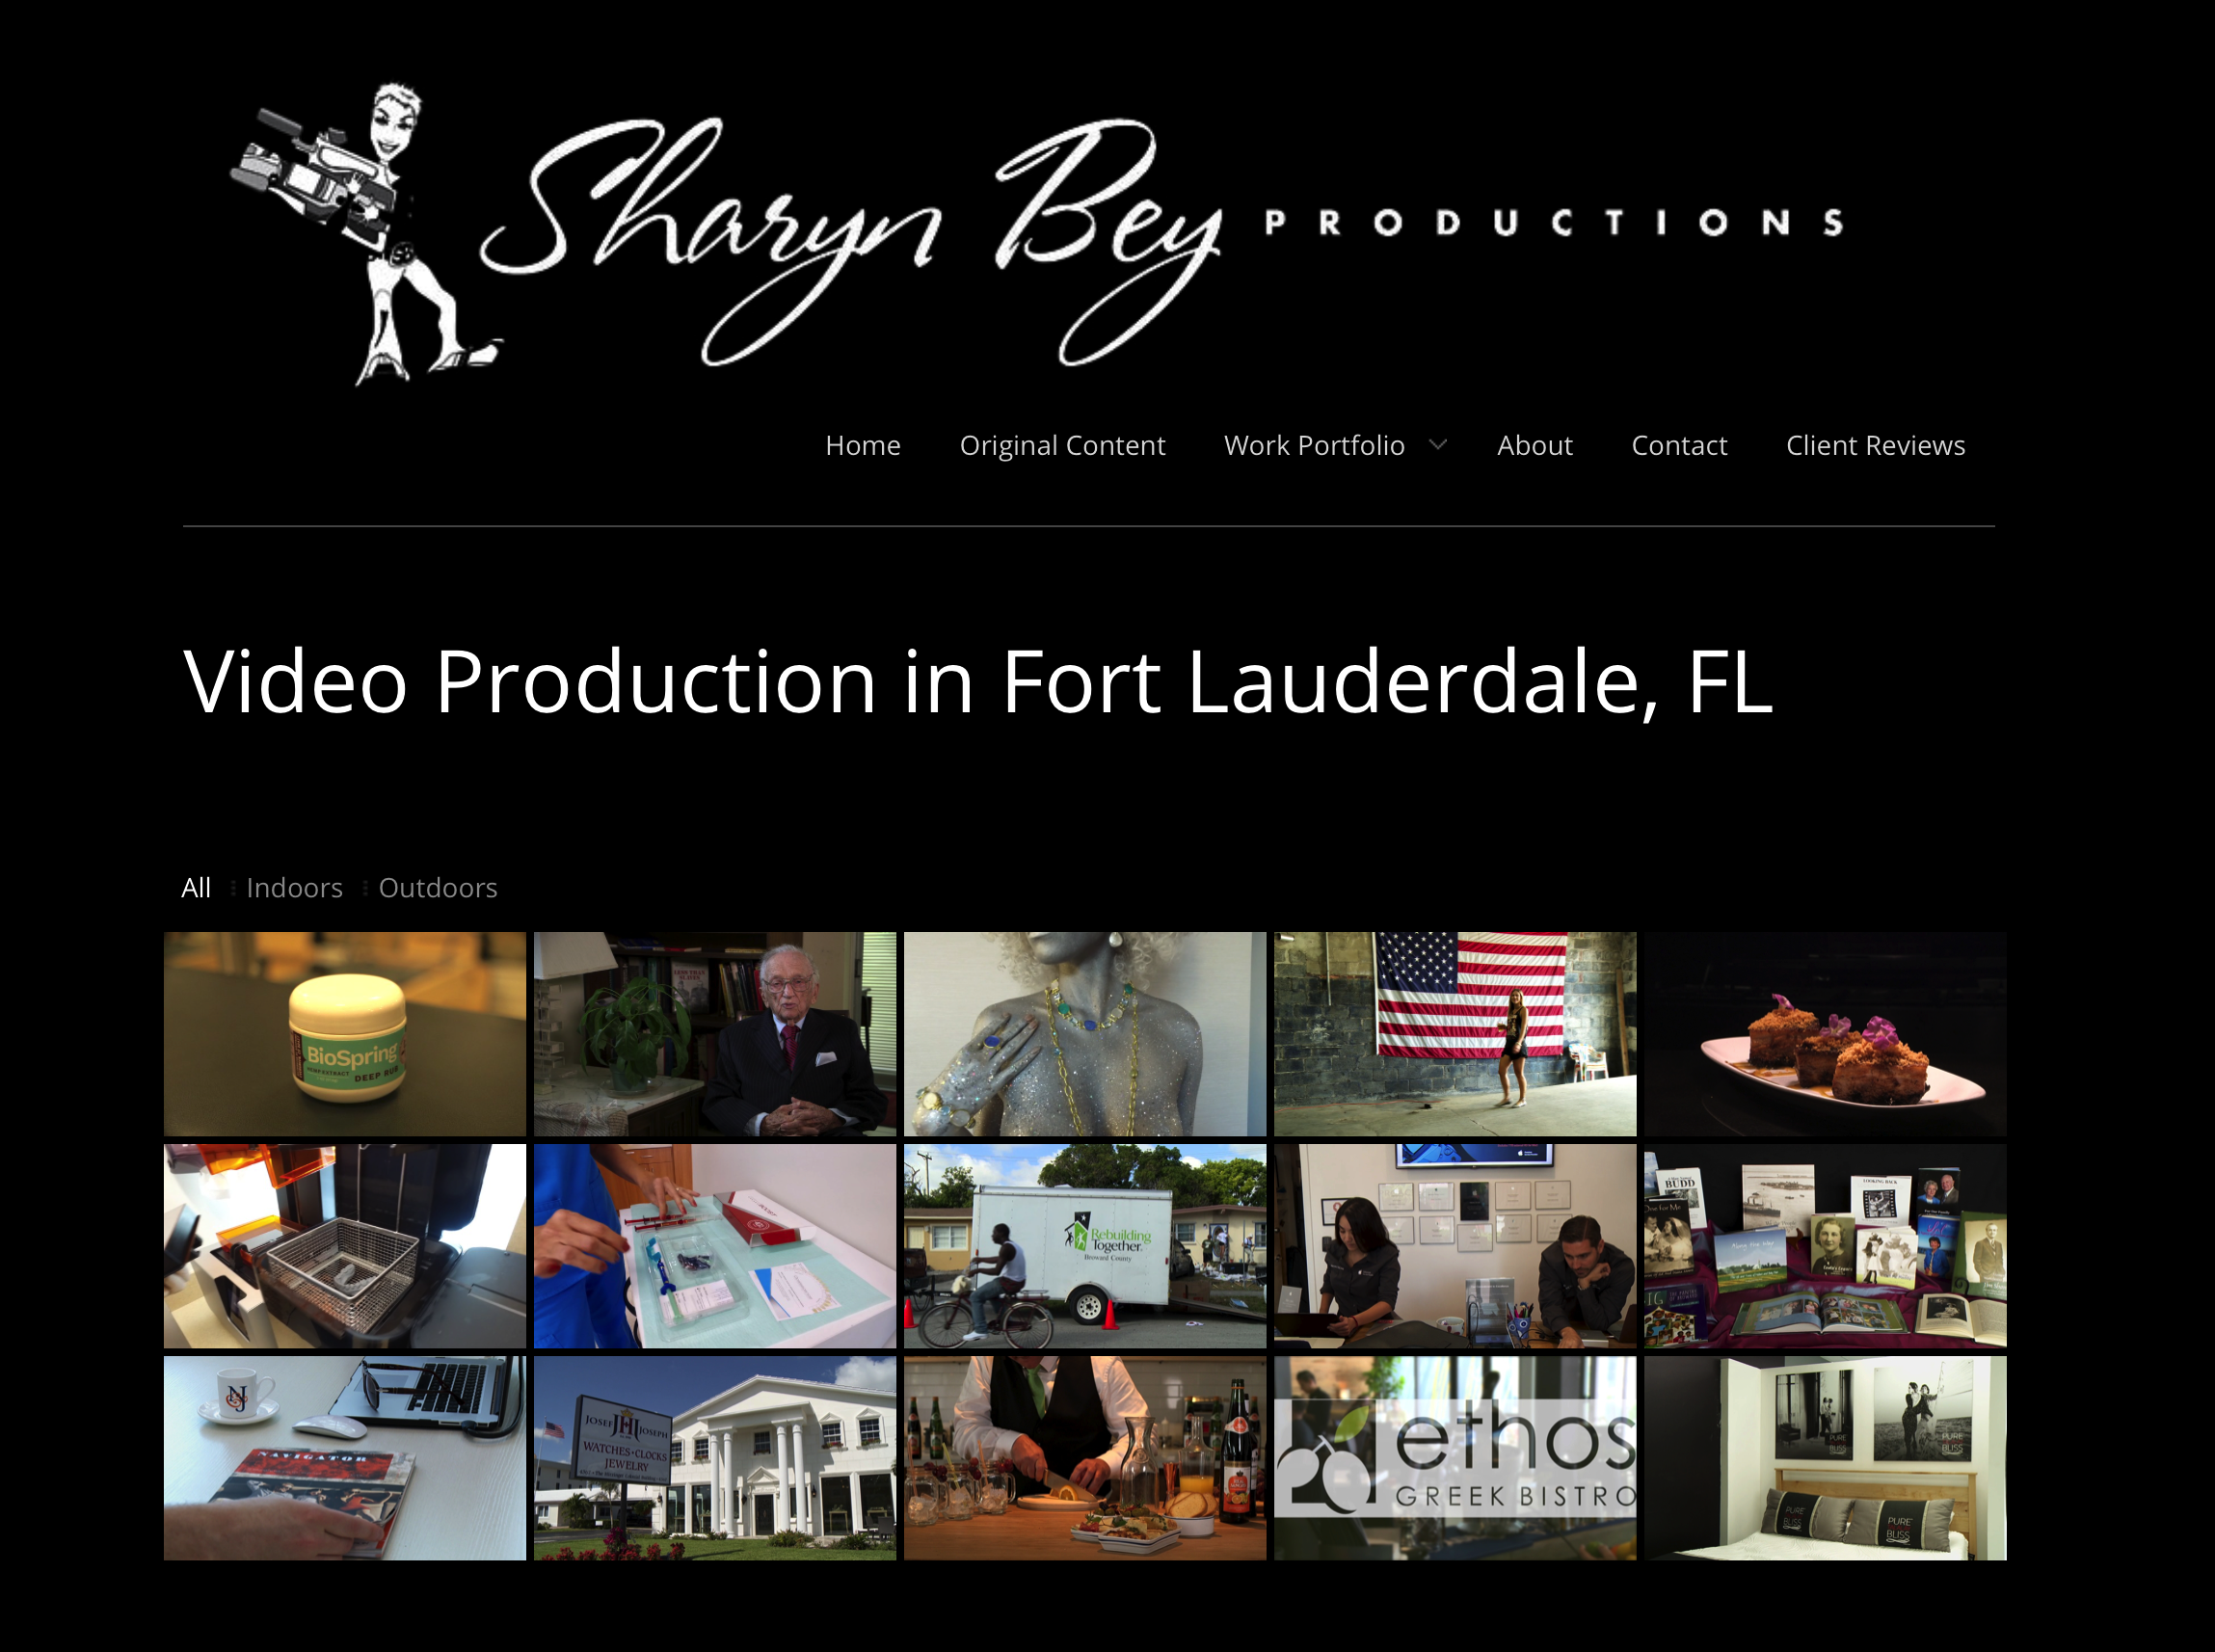 Sharyn Bey Productions